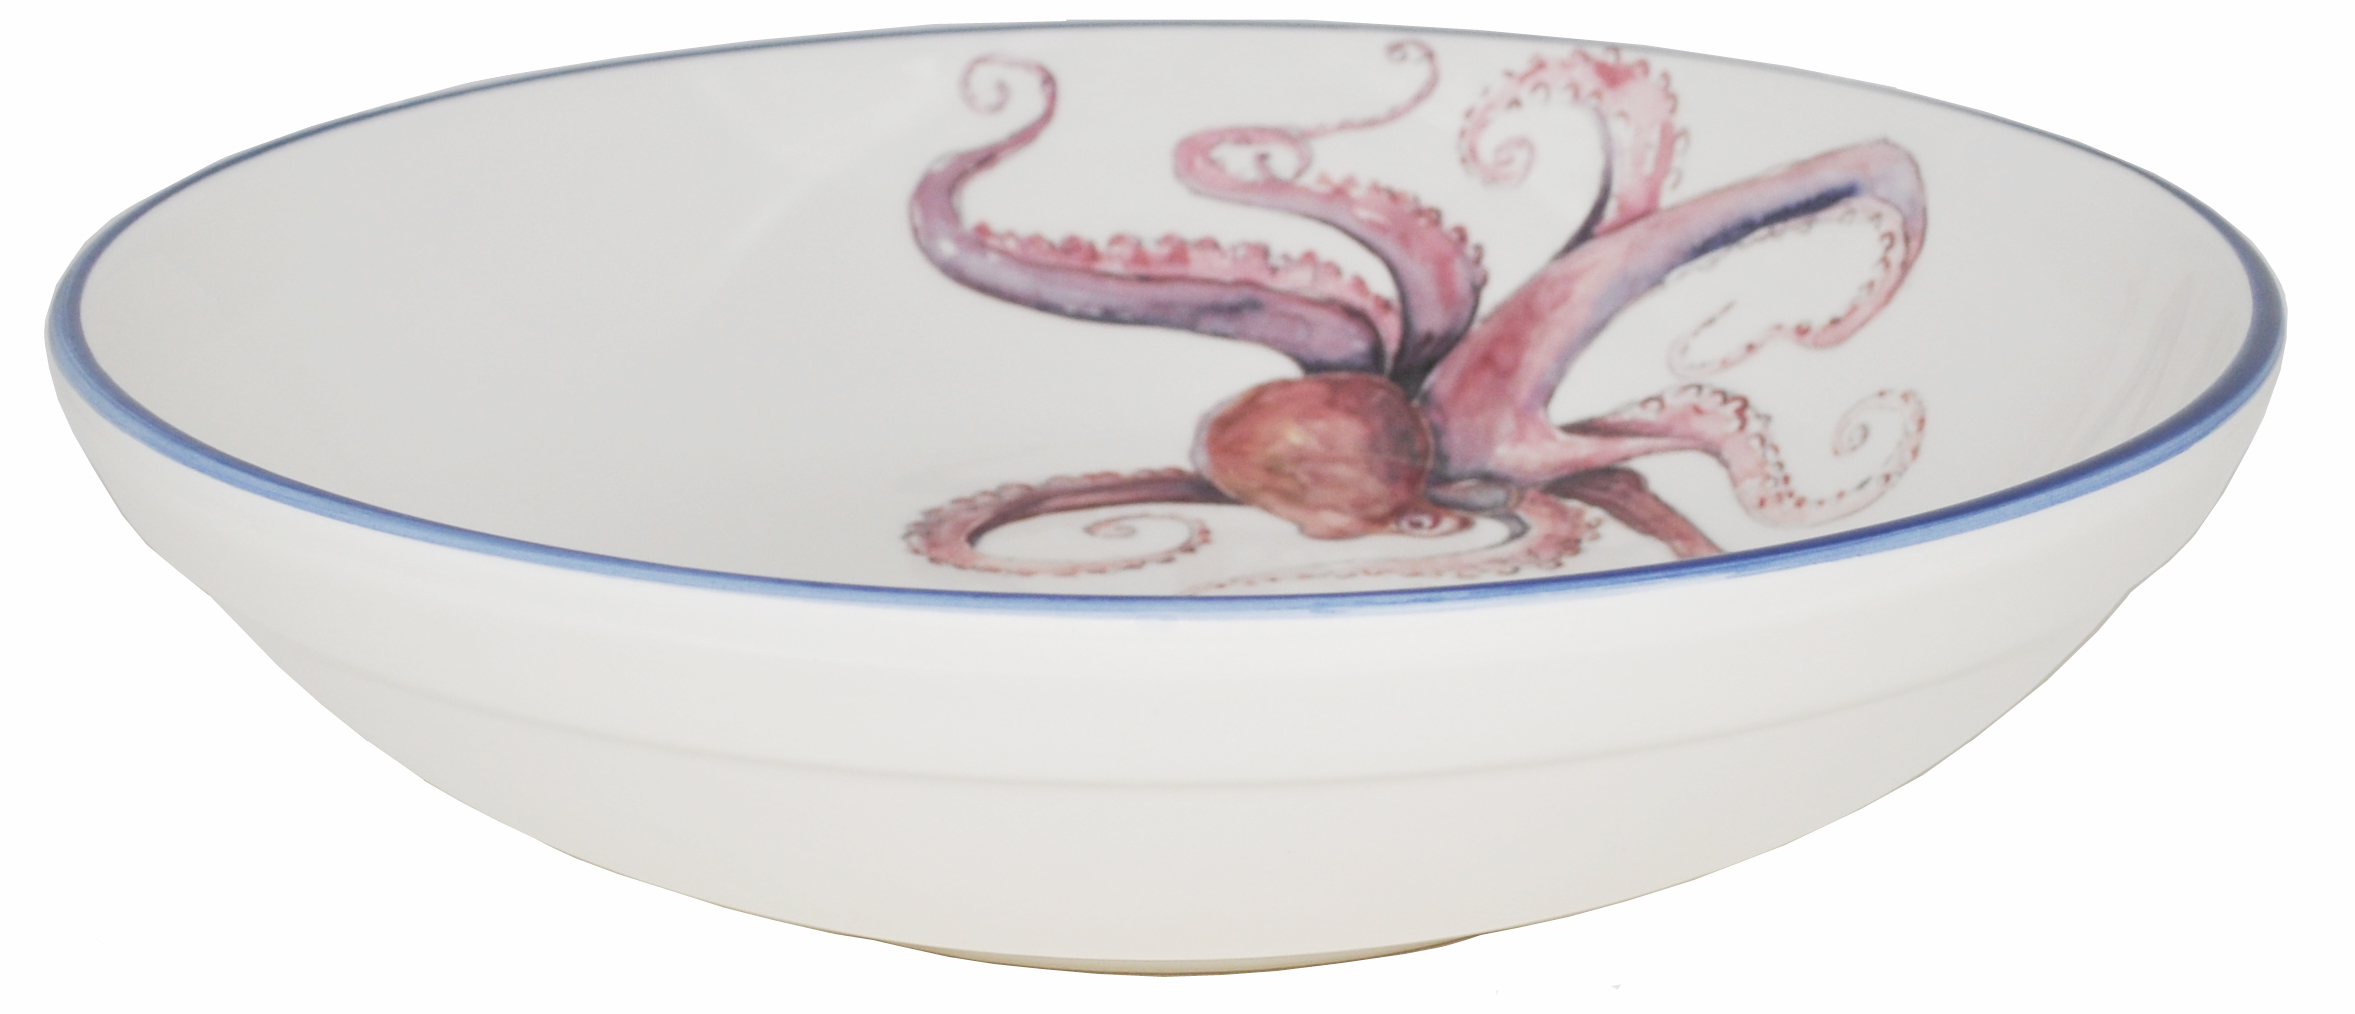 Octopus Serving Bowl